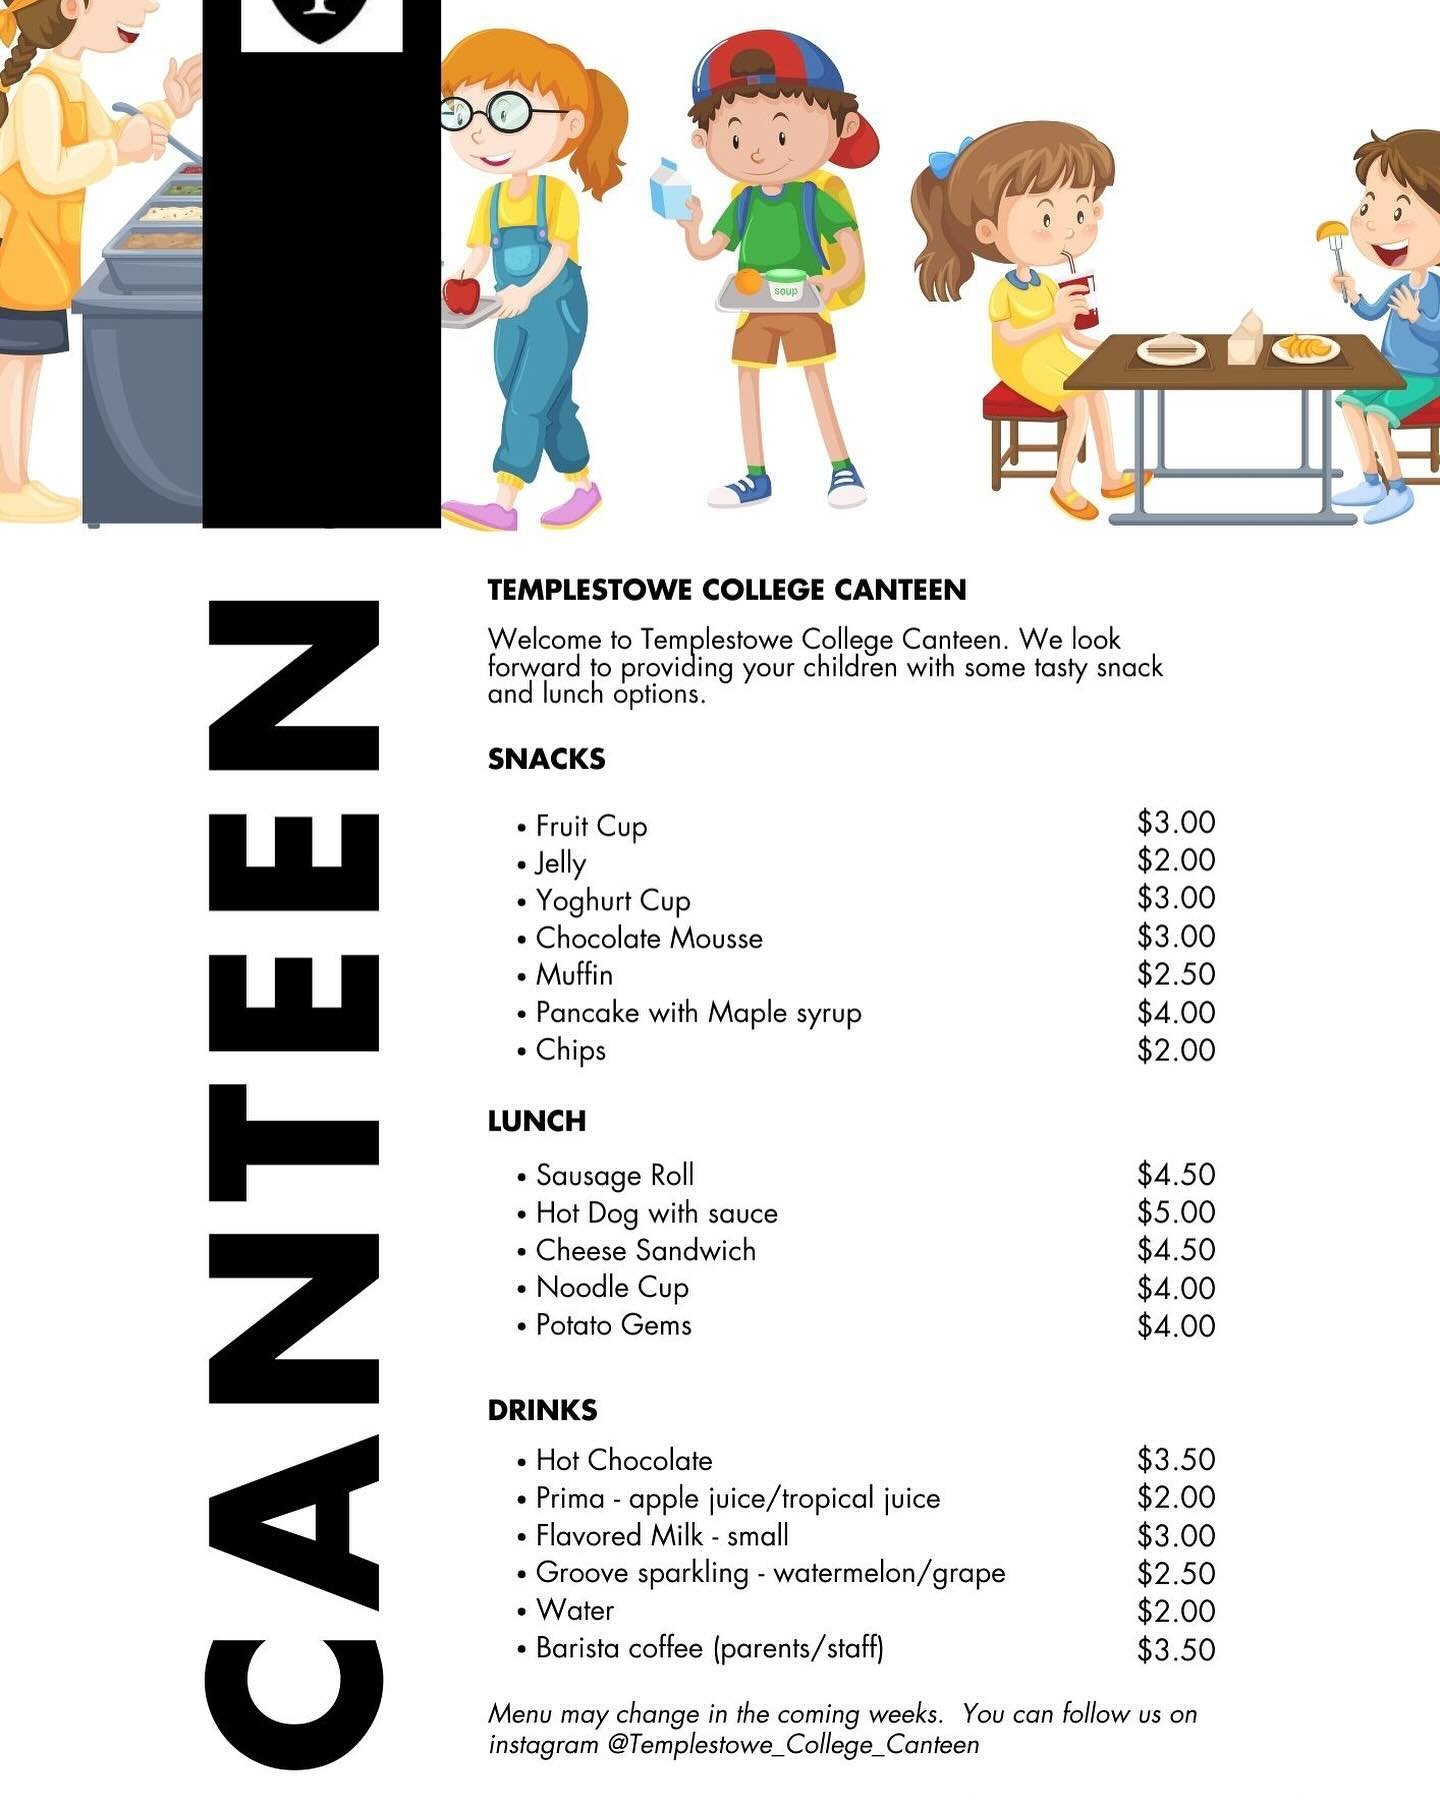 TC New century canteen menu for Saturday